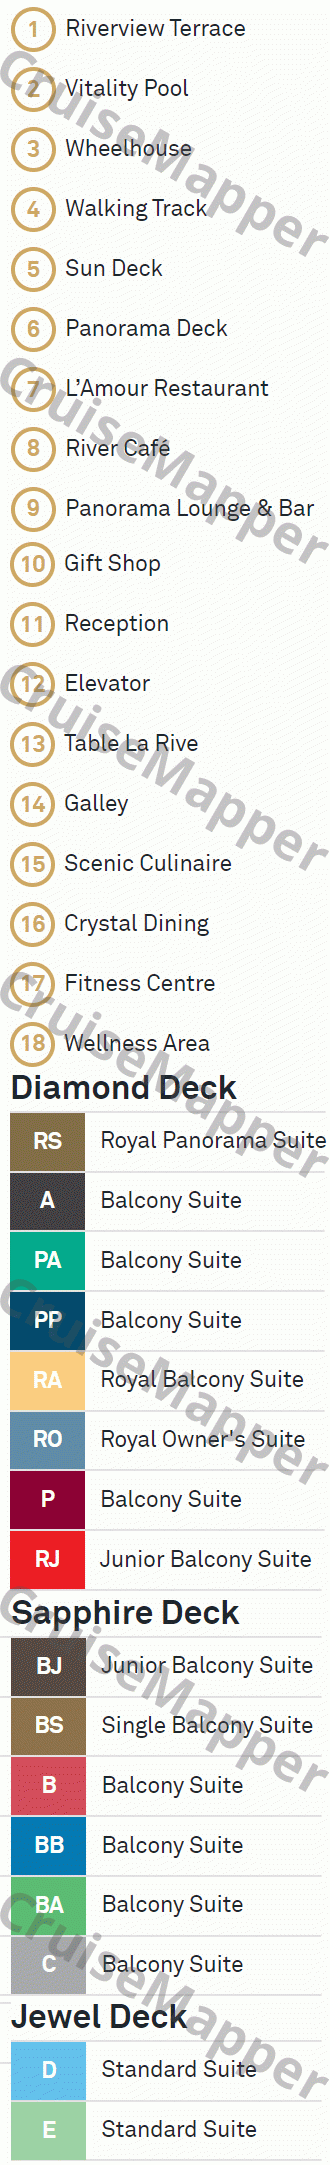 Royal Emerald deck 2 plan (Sapphire-Dining) legend